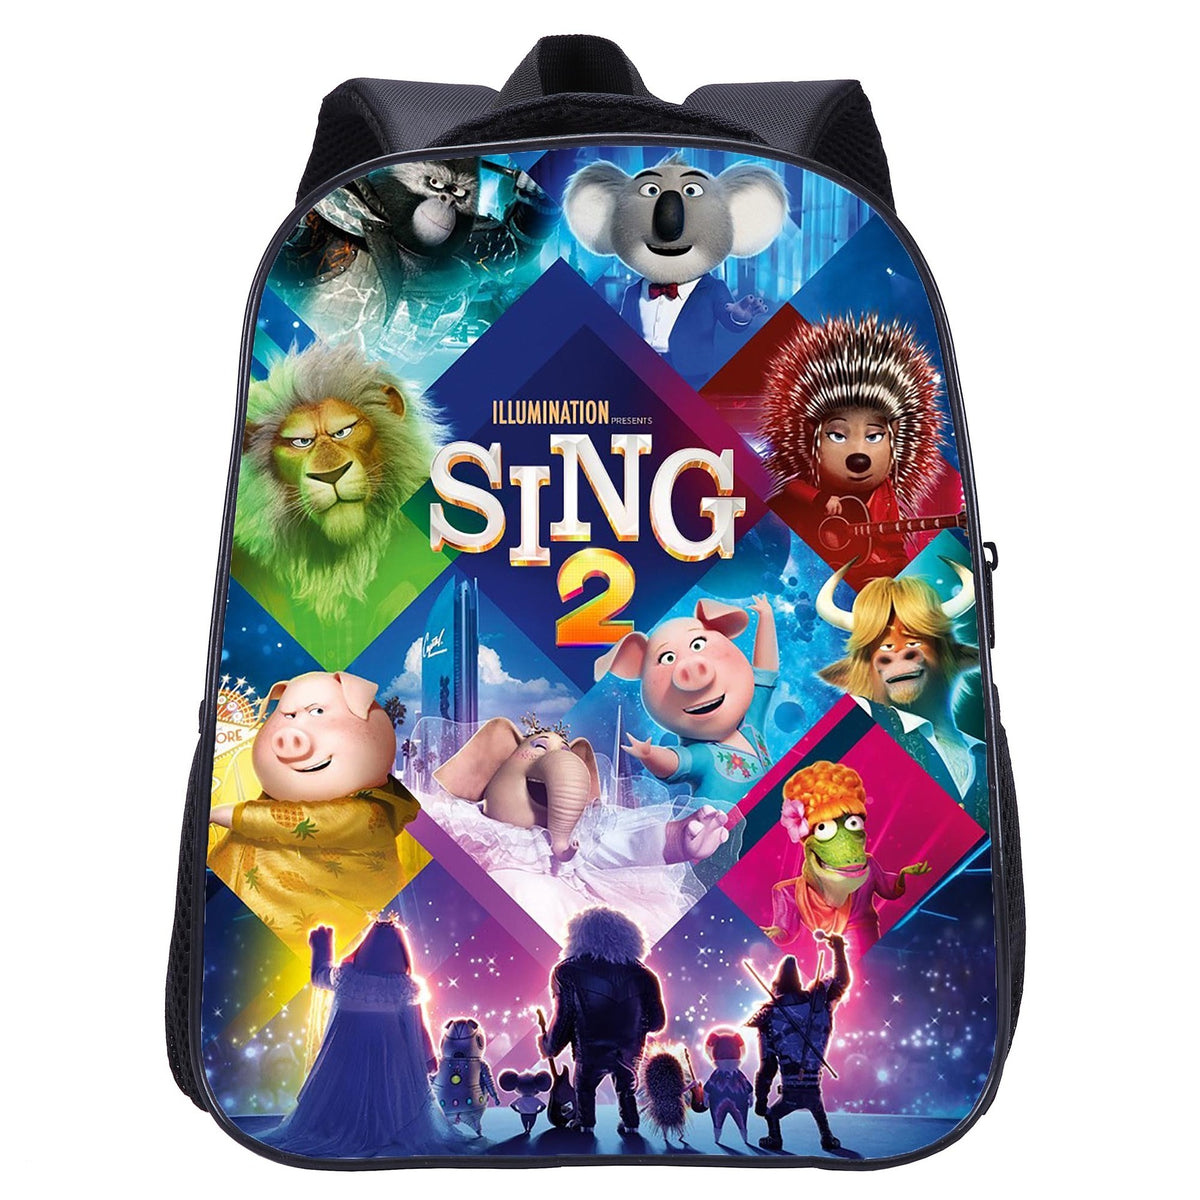 Sing 2 Backpack School Sports Bag for Kids Boy Girl